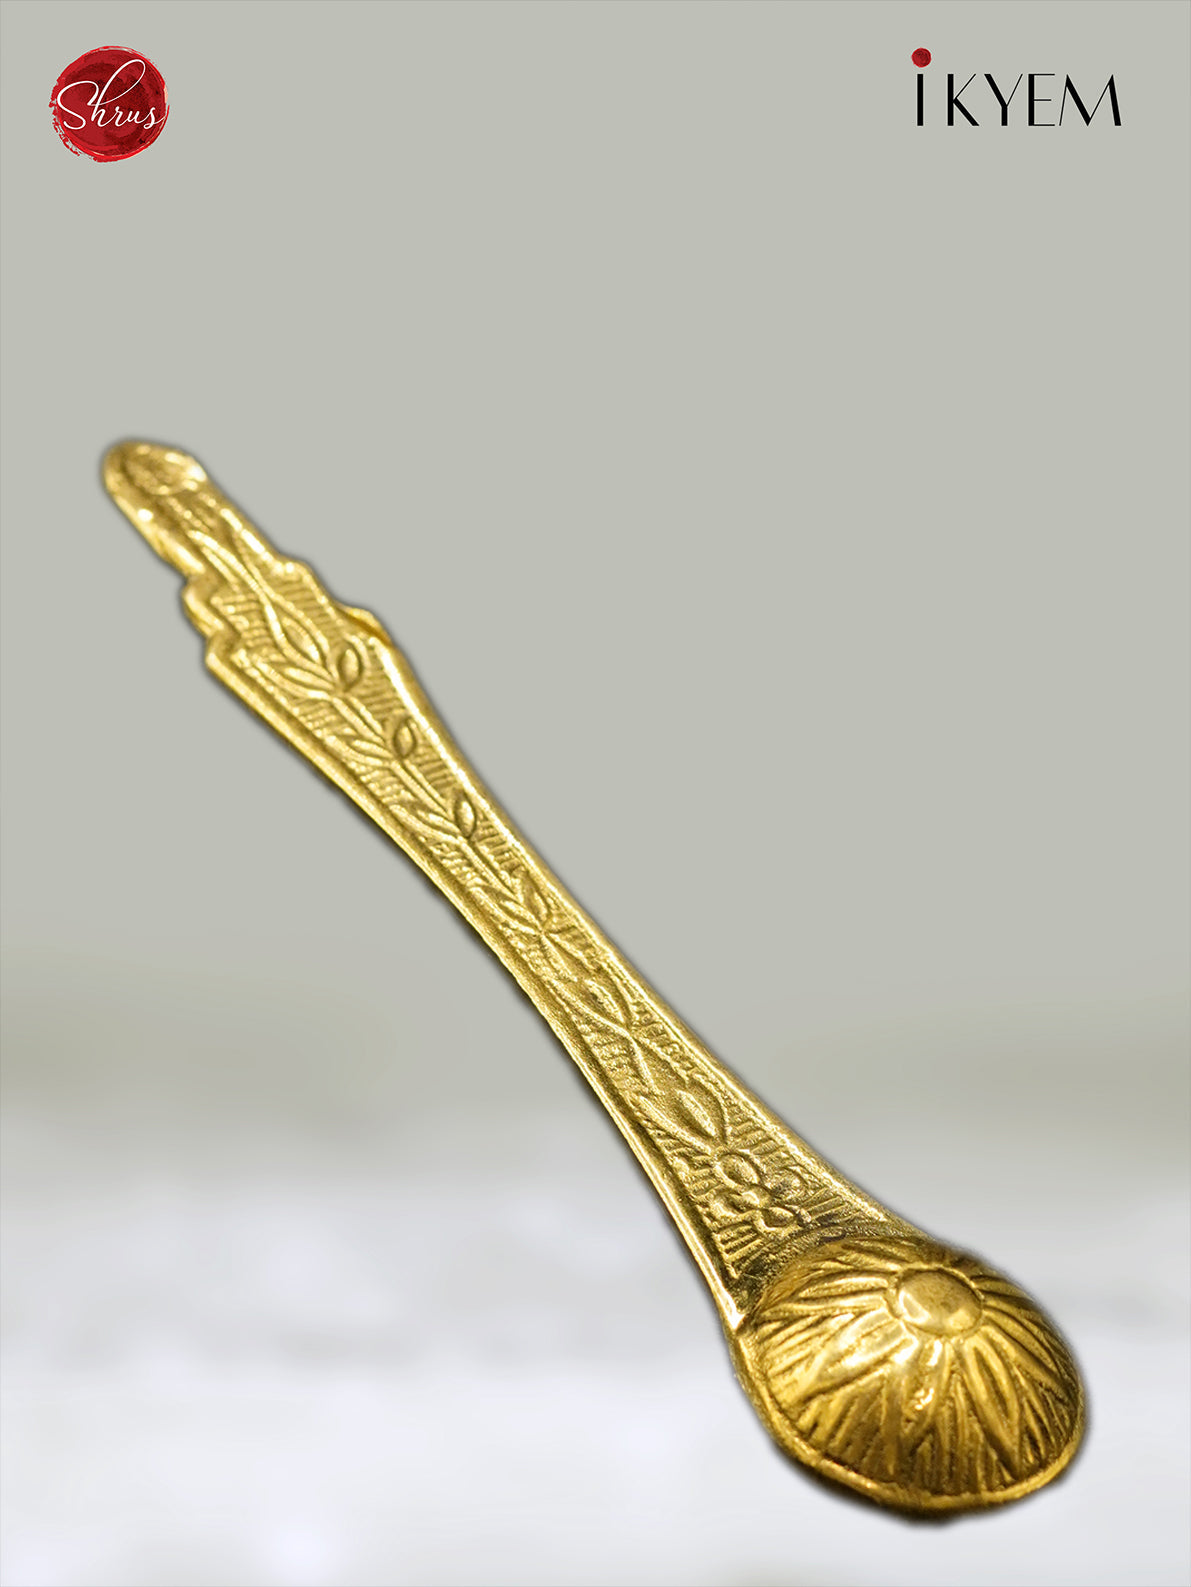 Panchpatra (Spoon)